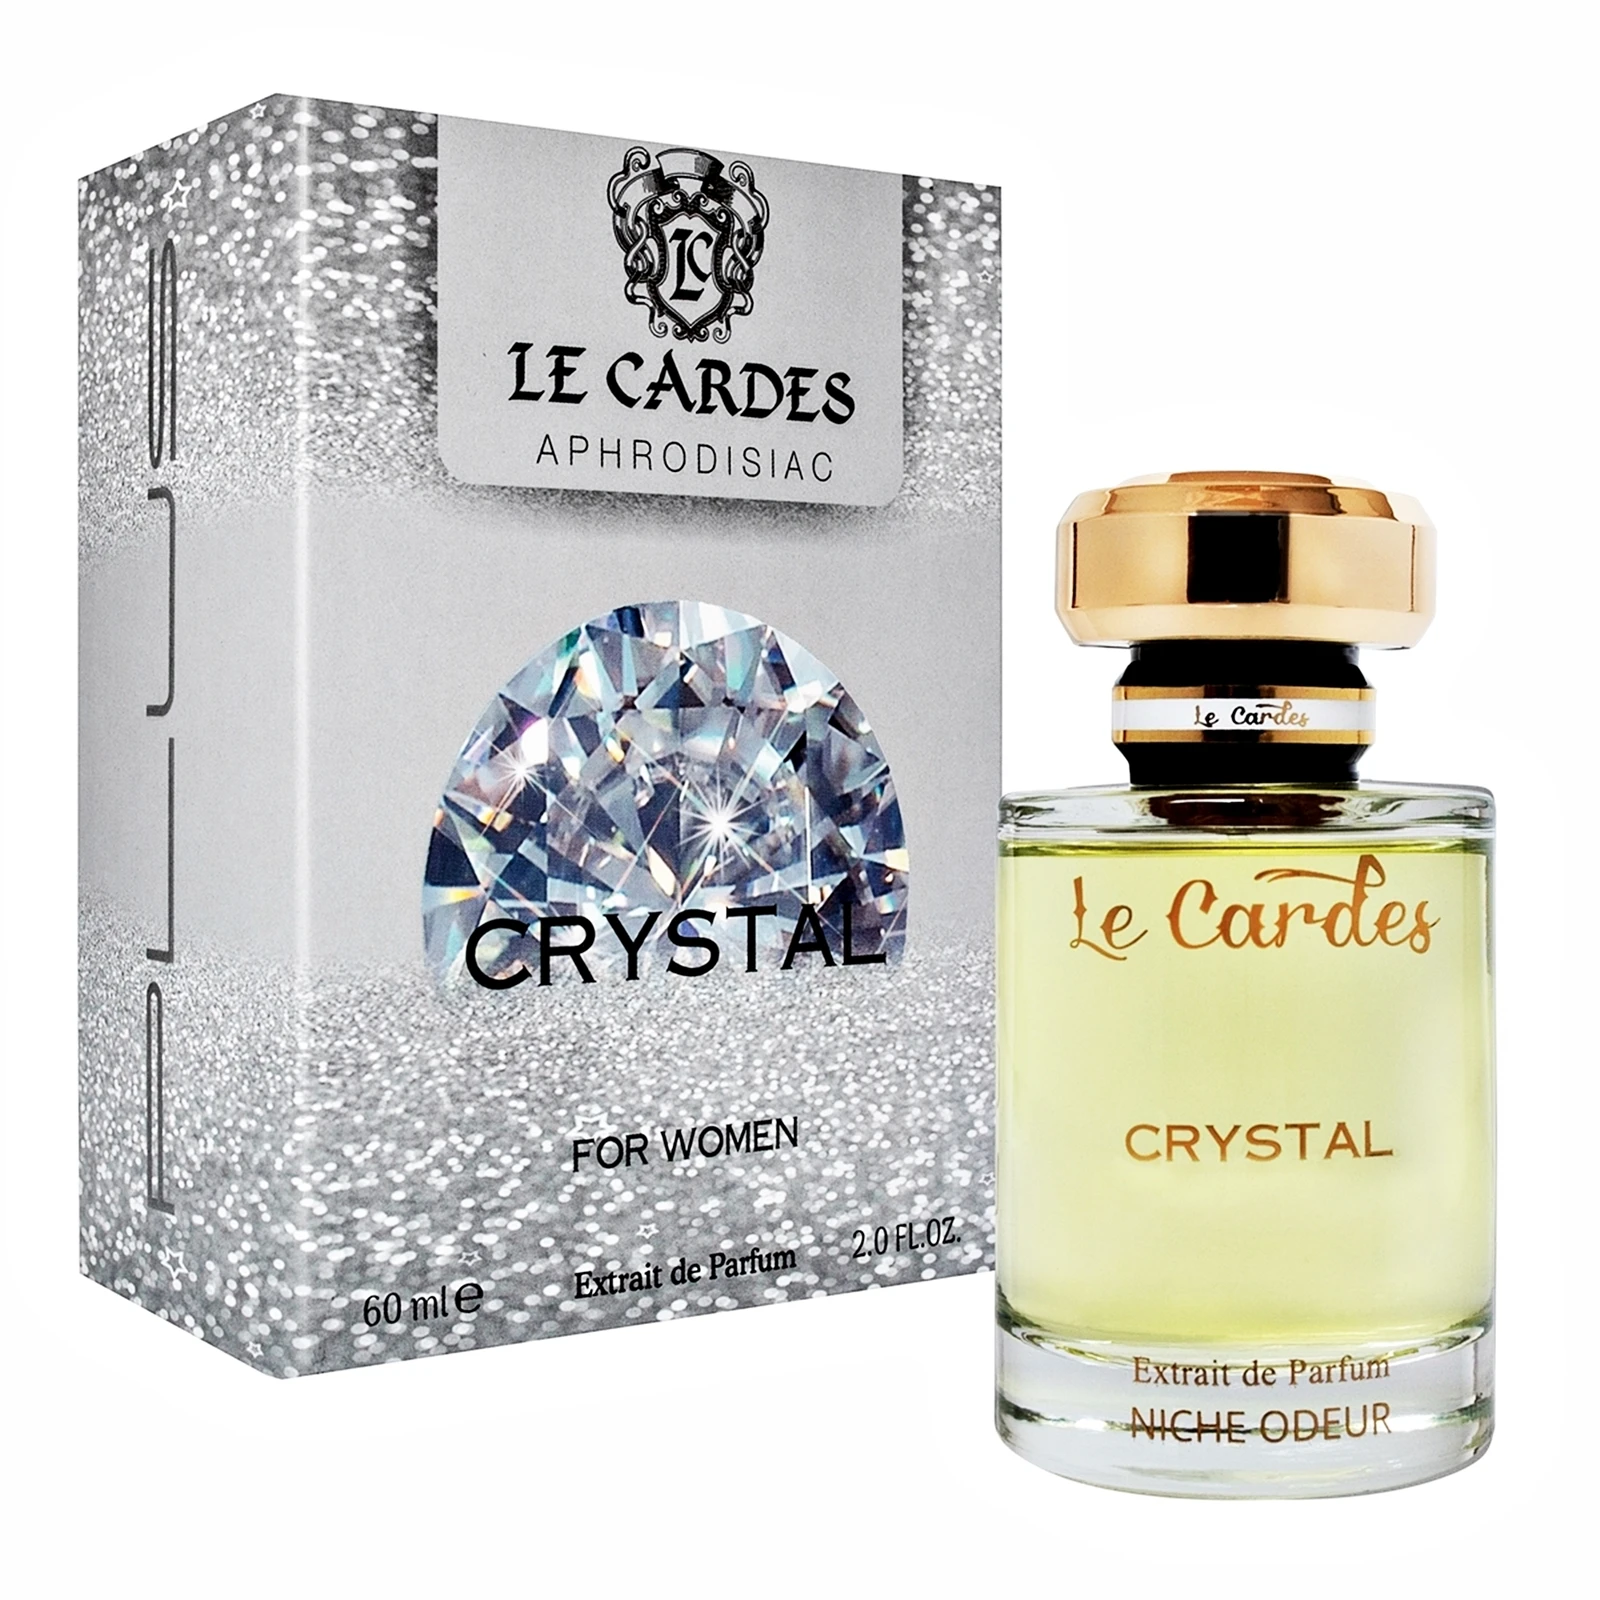 Le Cardes Plus Crsytal афродизиак экстракт парфюма 60 мл женские парфюмы от AliExpress RU&CIS NEW